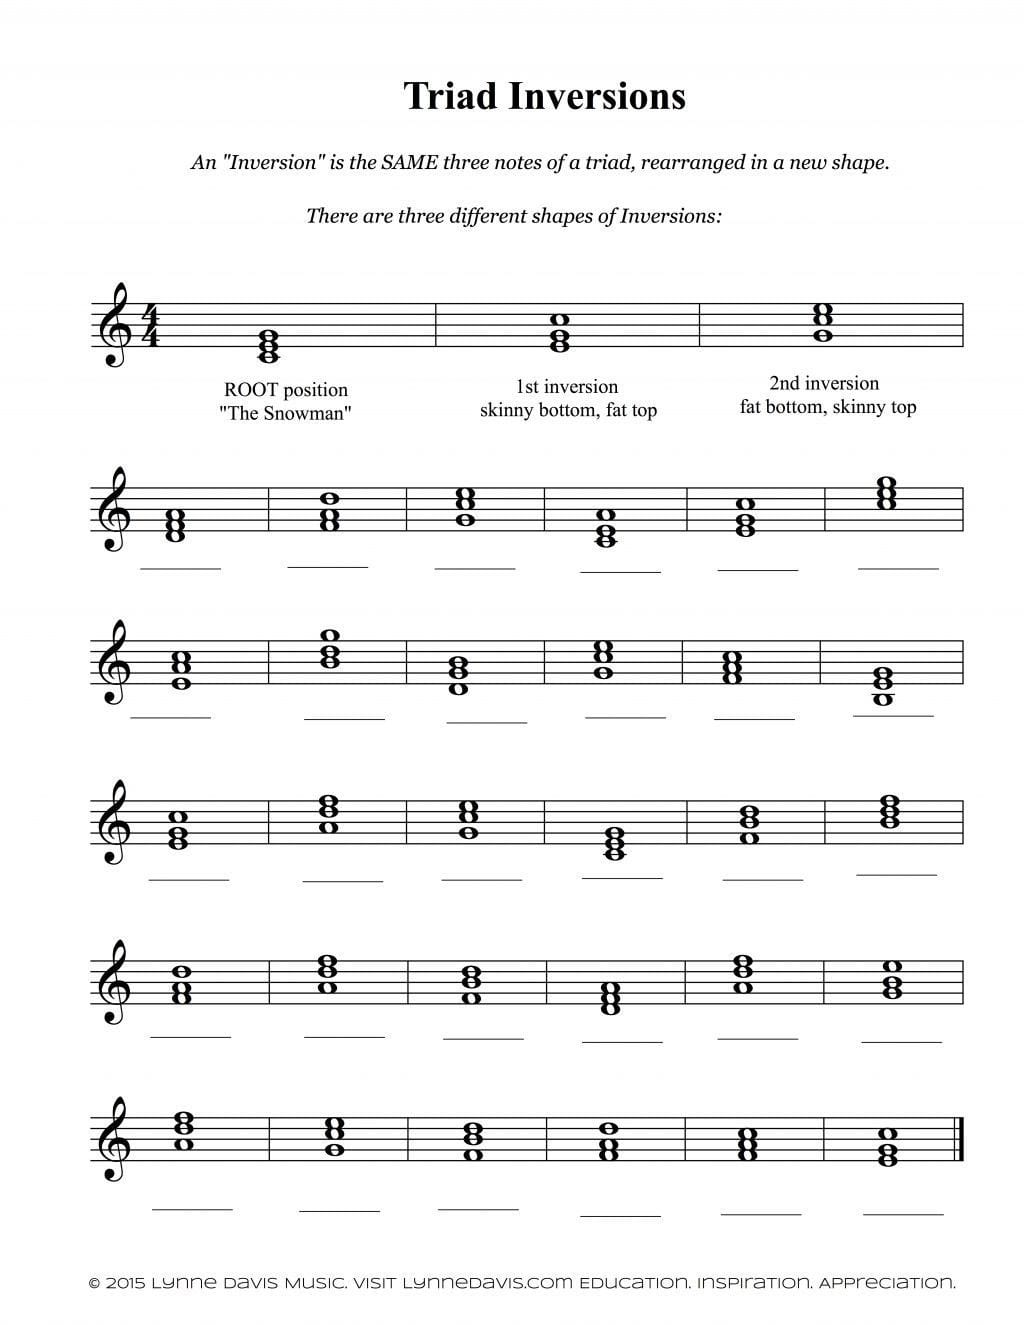 printable-music-theory-worksheets